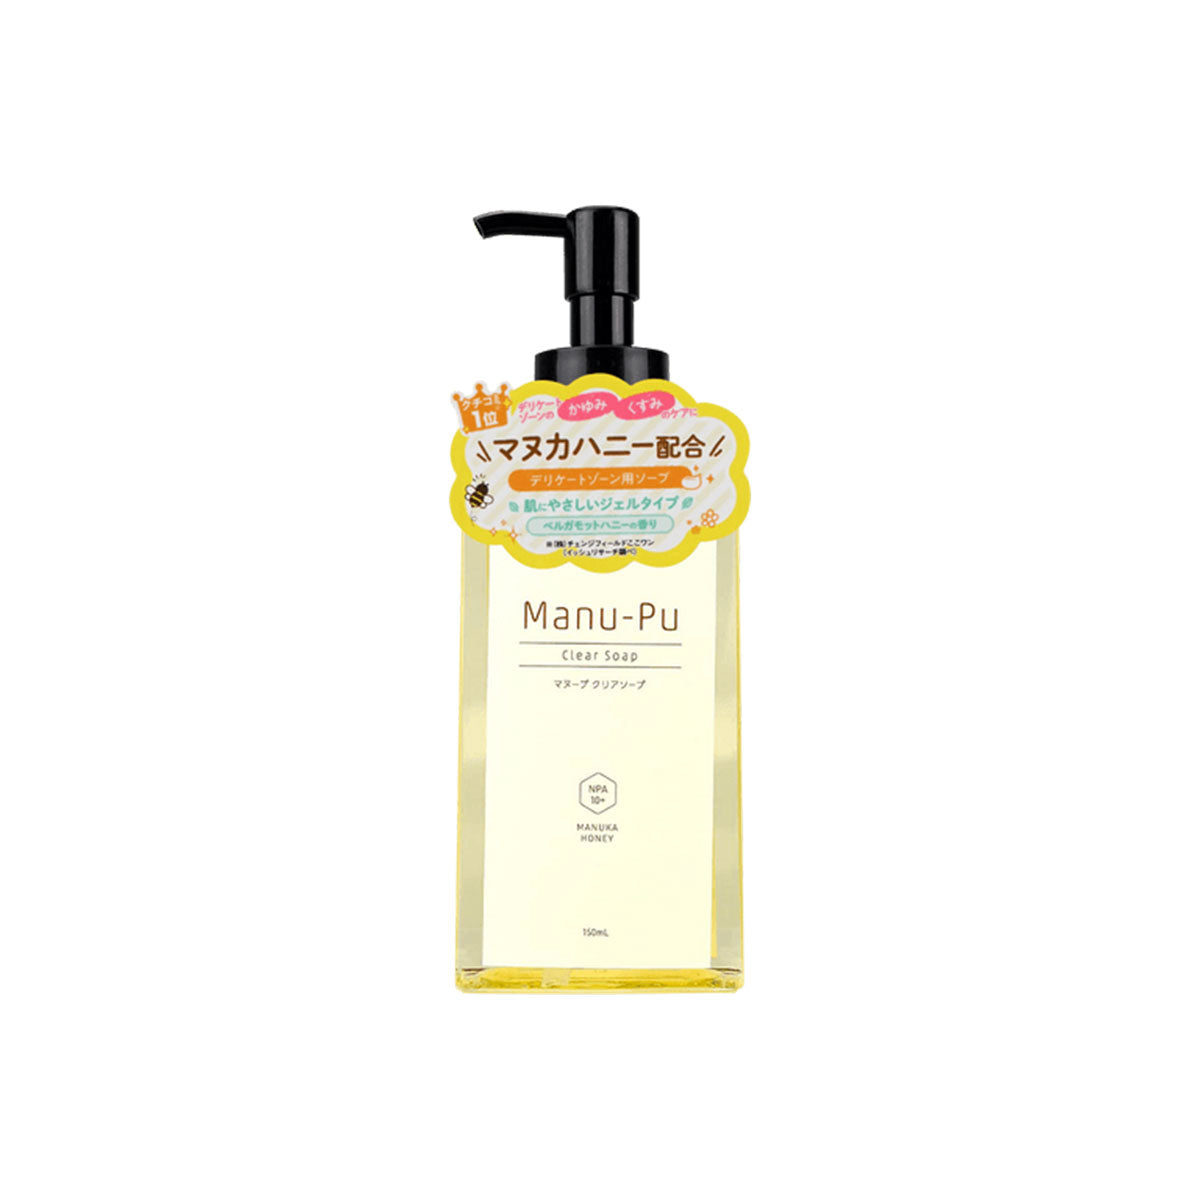 Clear Soap Intimate Feminine Wash Highly Formulated With Manuka Honey 150ml